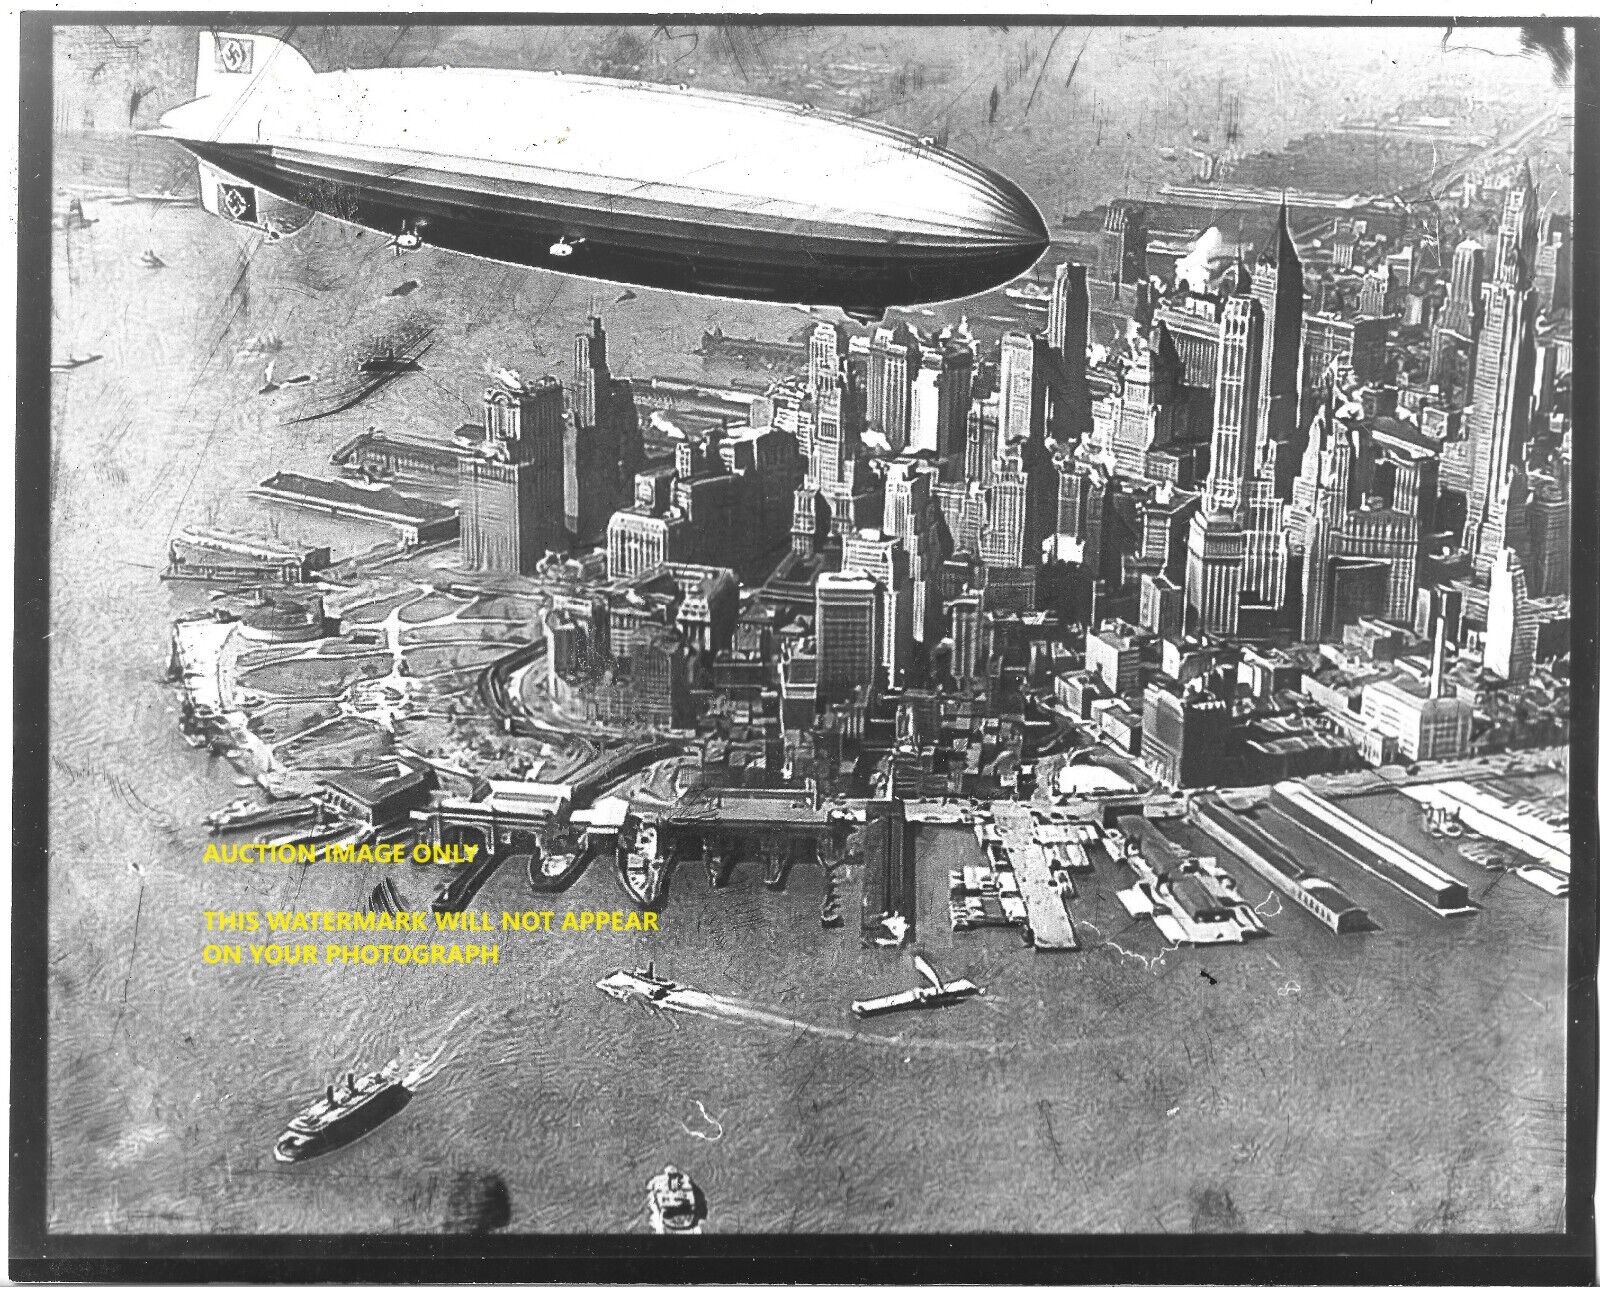 Vintage Photograph: Airship Over New York Before Hindenburg Disaster - May 1937